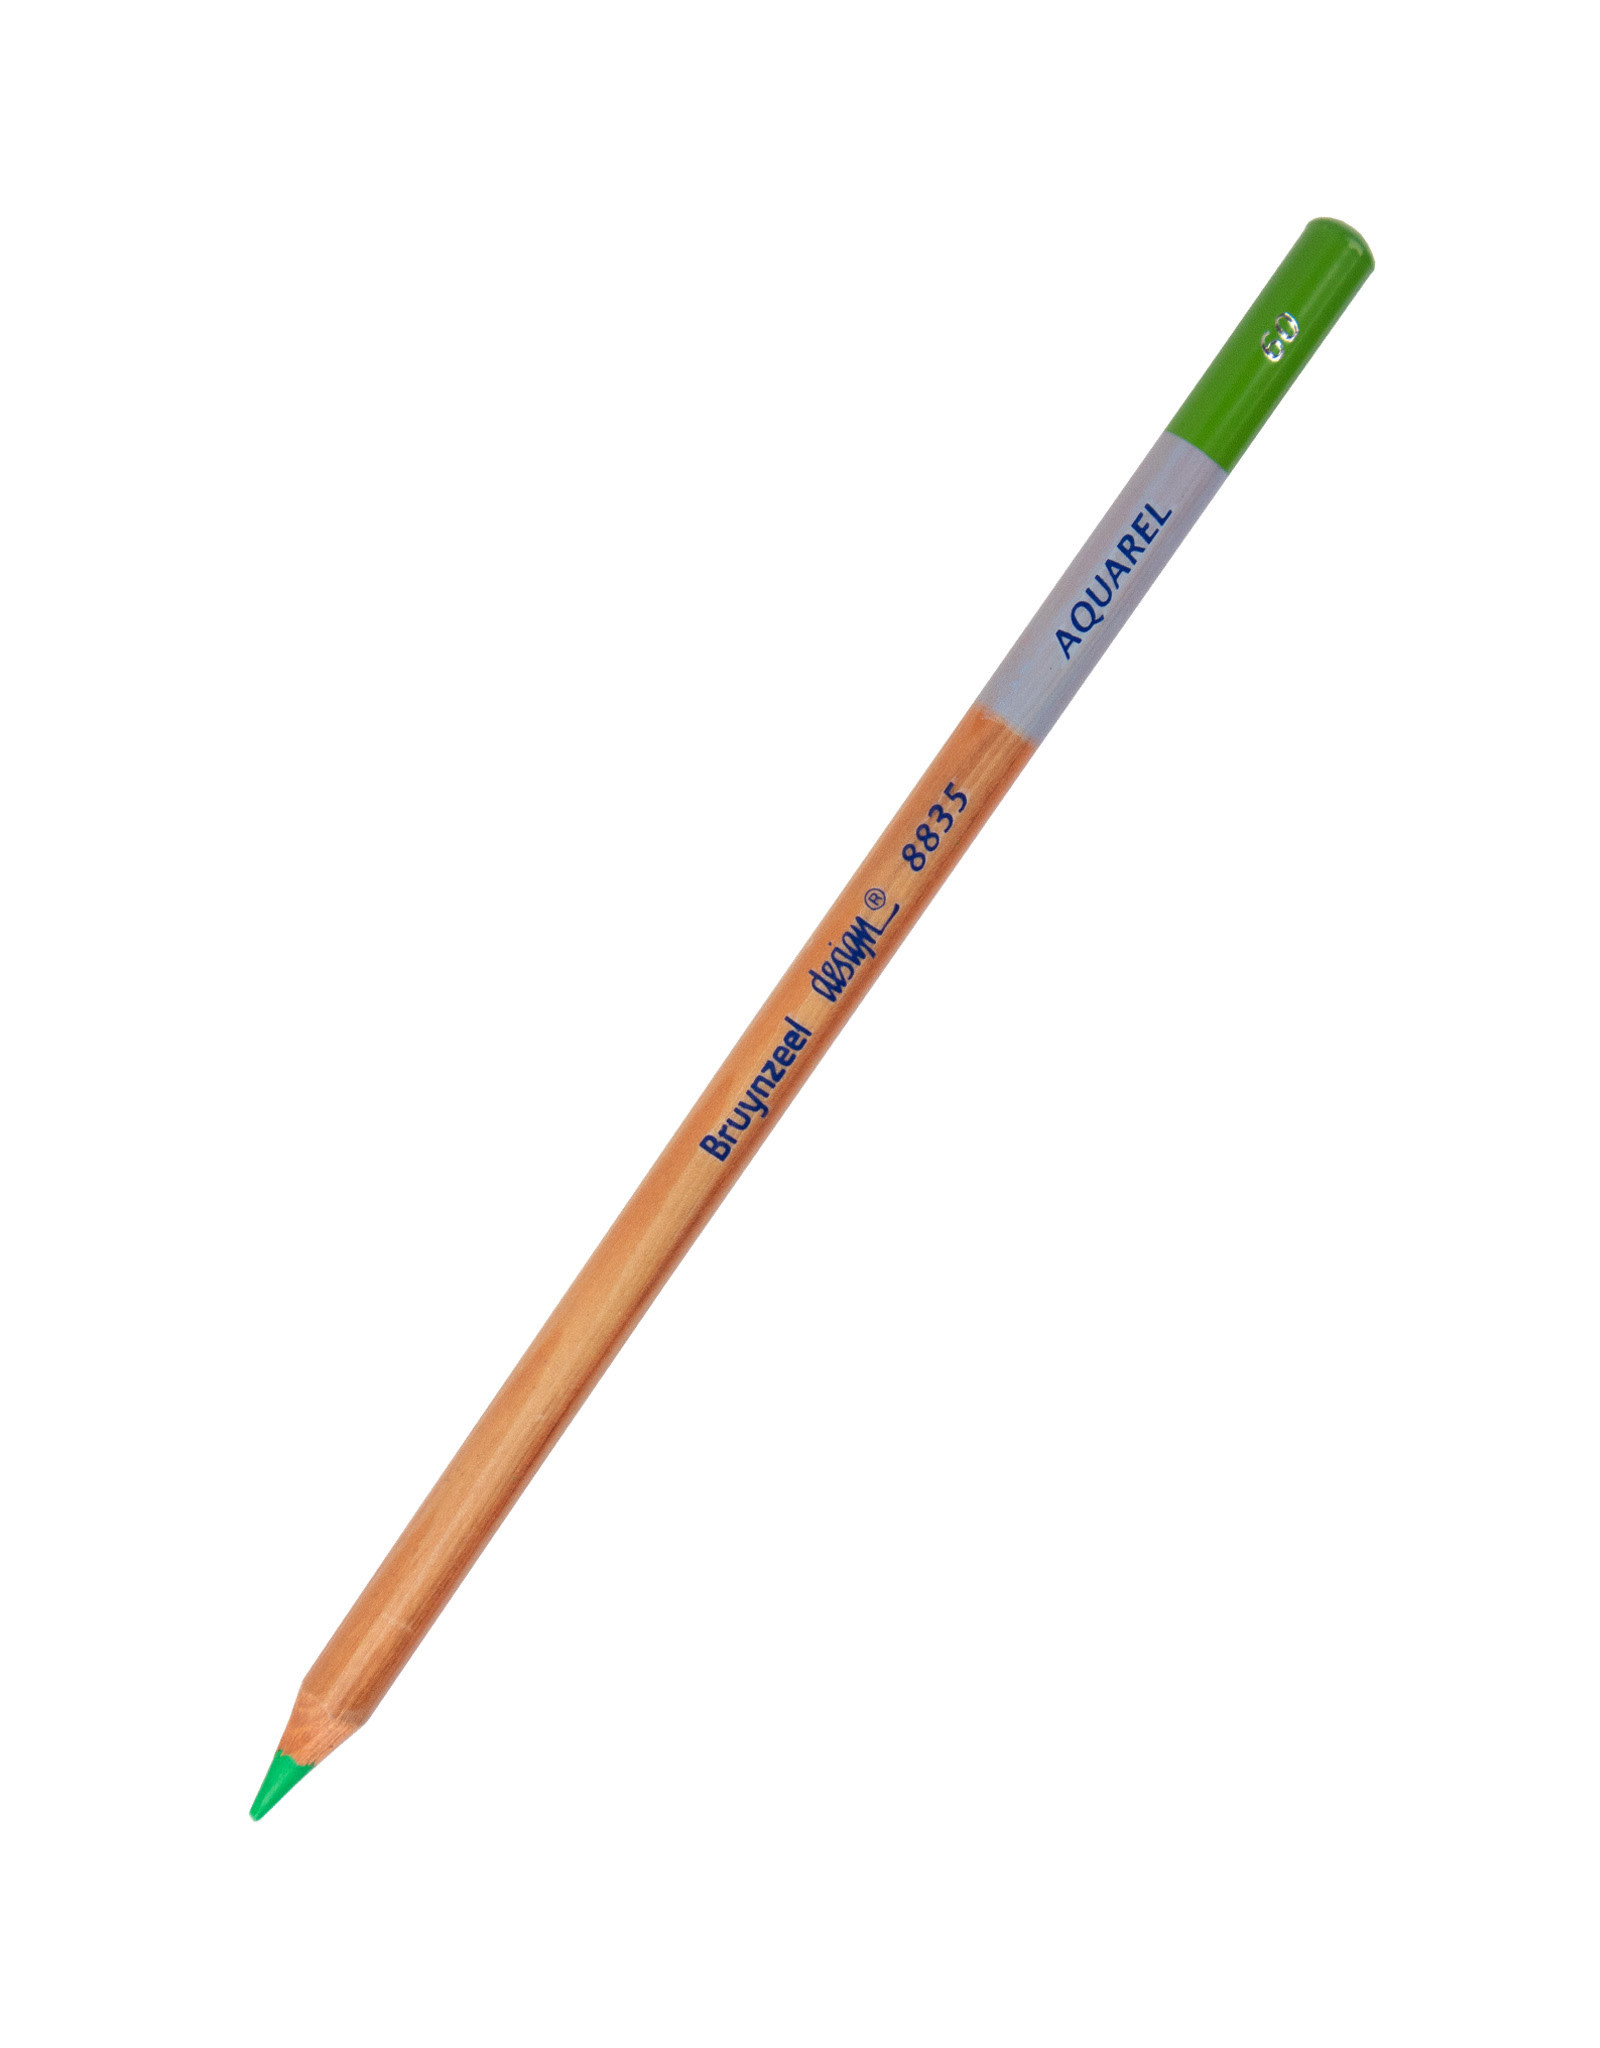 Royal Talens Bruynzeel Design Aquarel Pencil, Light Green